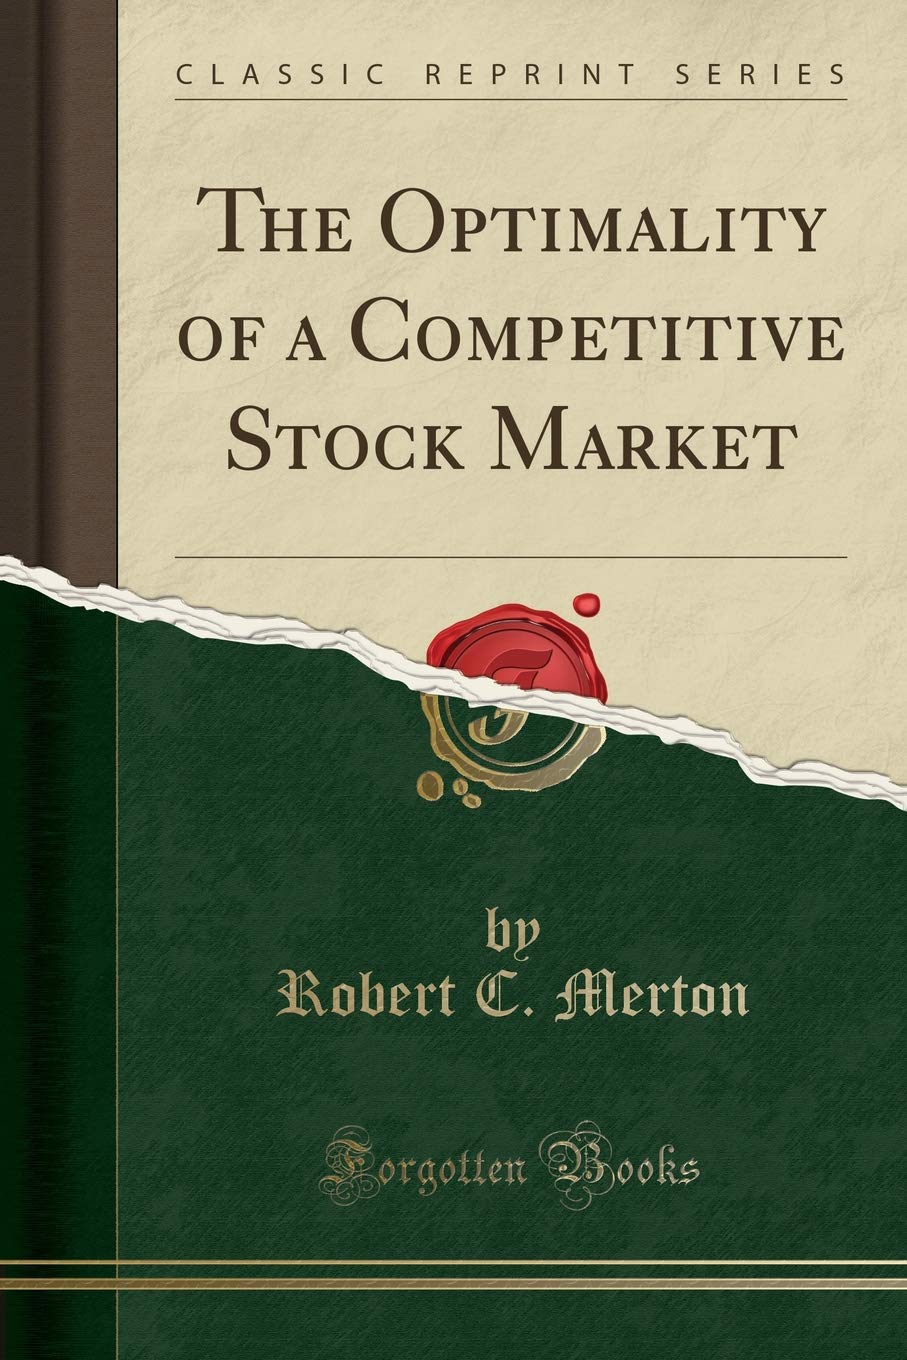 Robert Merton – The Stock Market